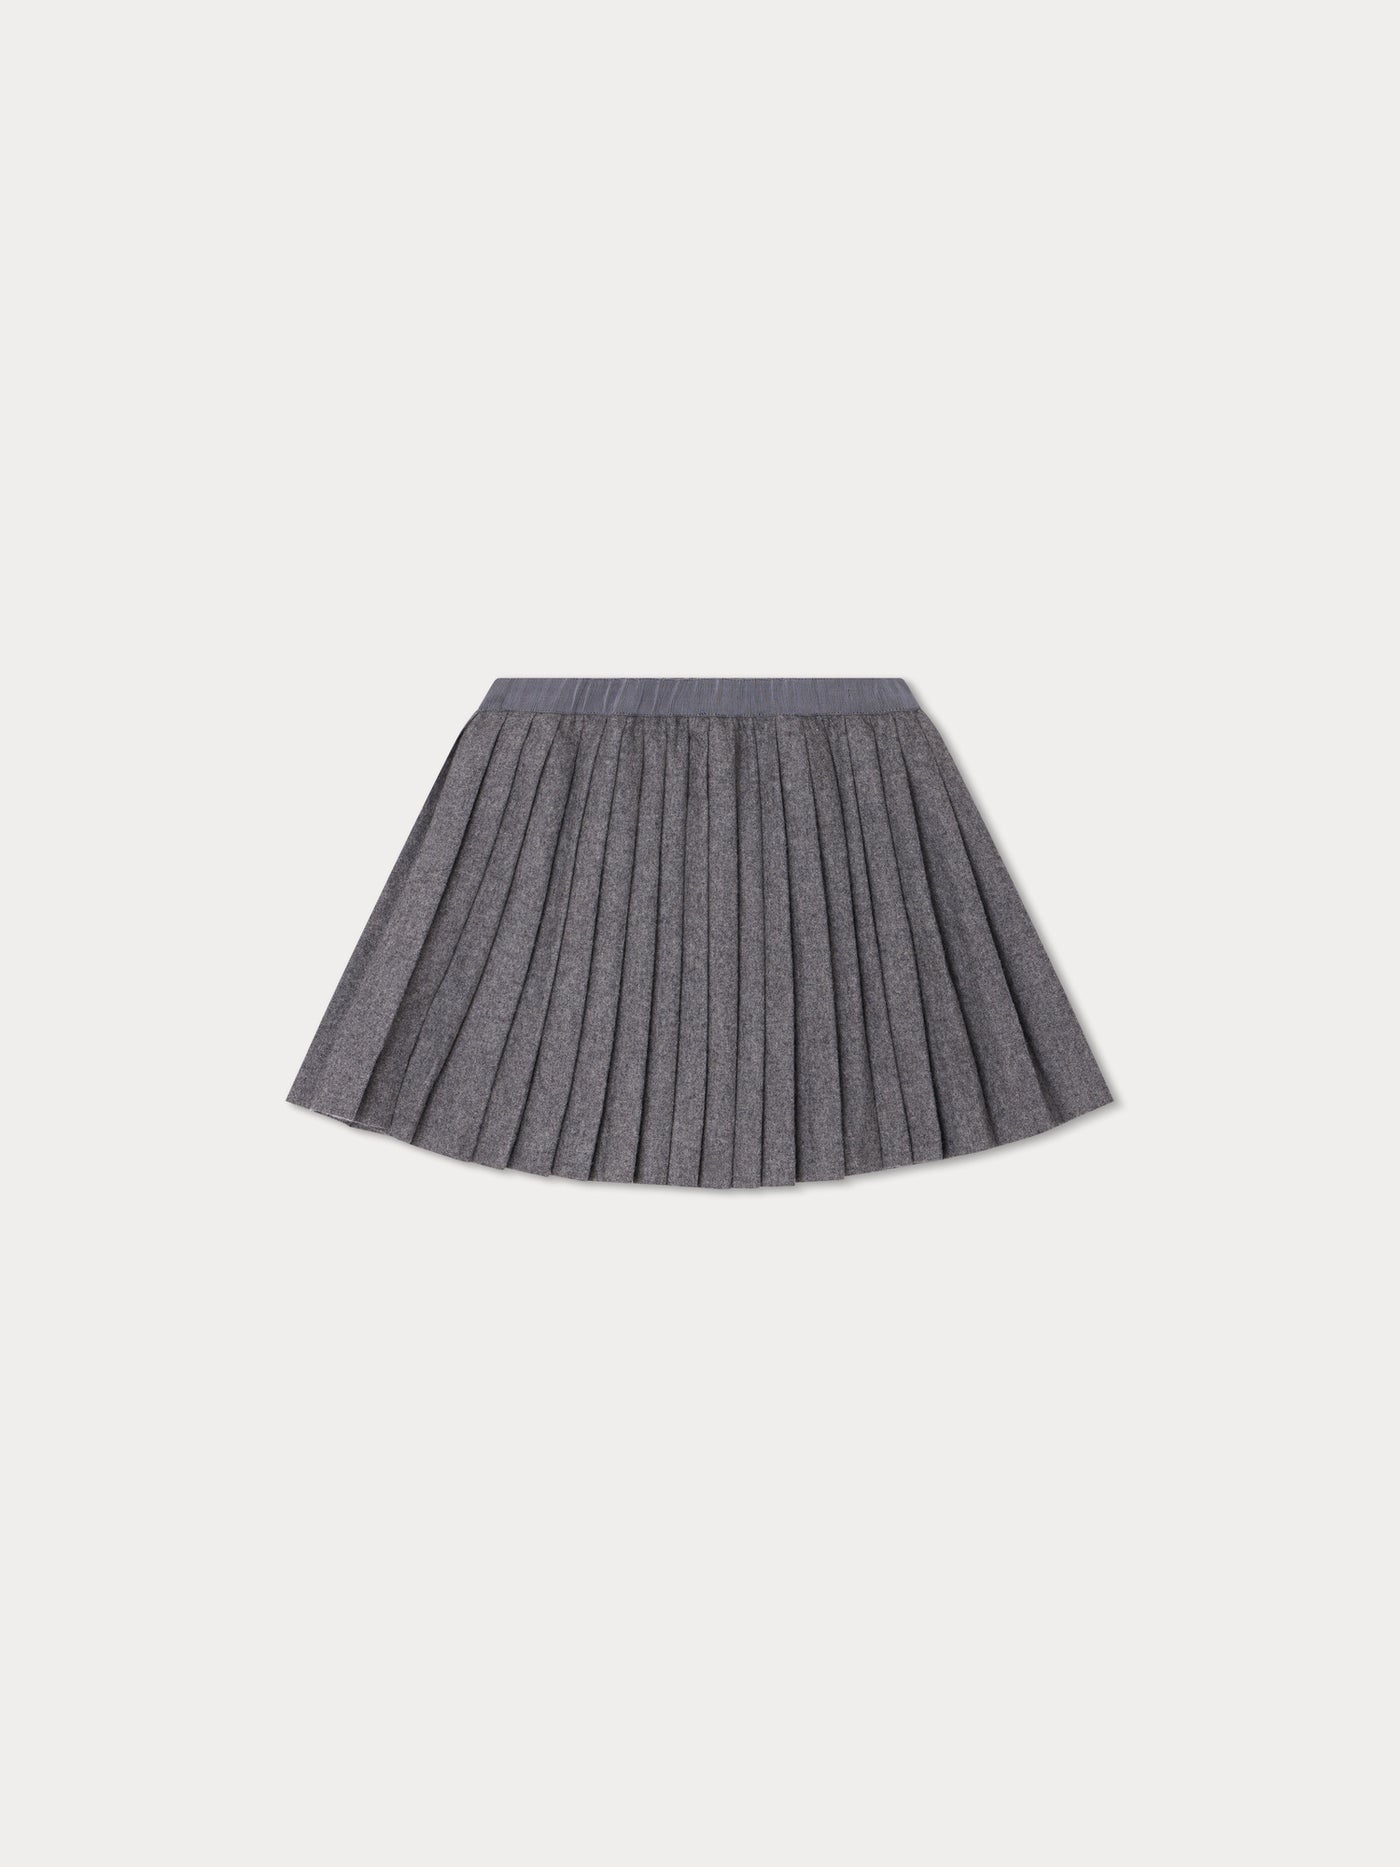 Jais Skirt dark heathered gray